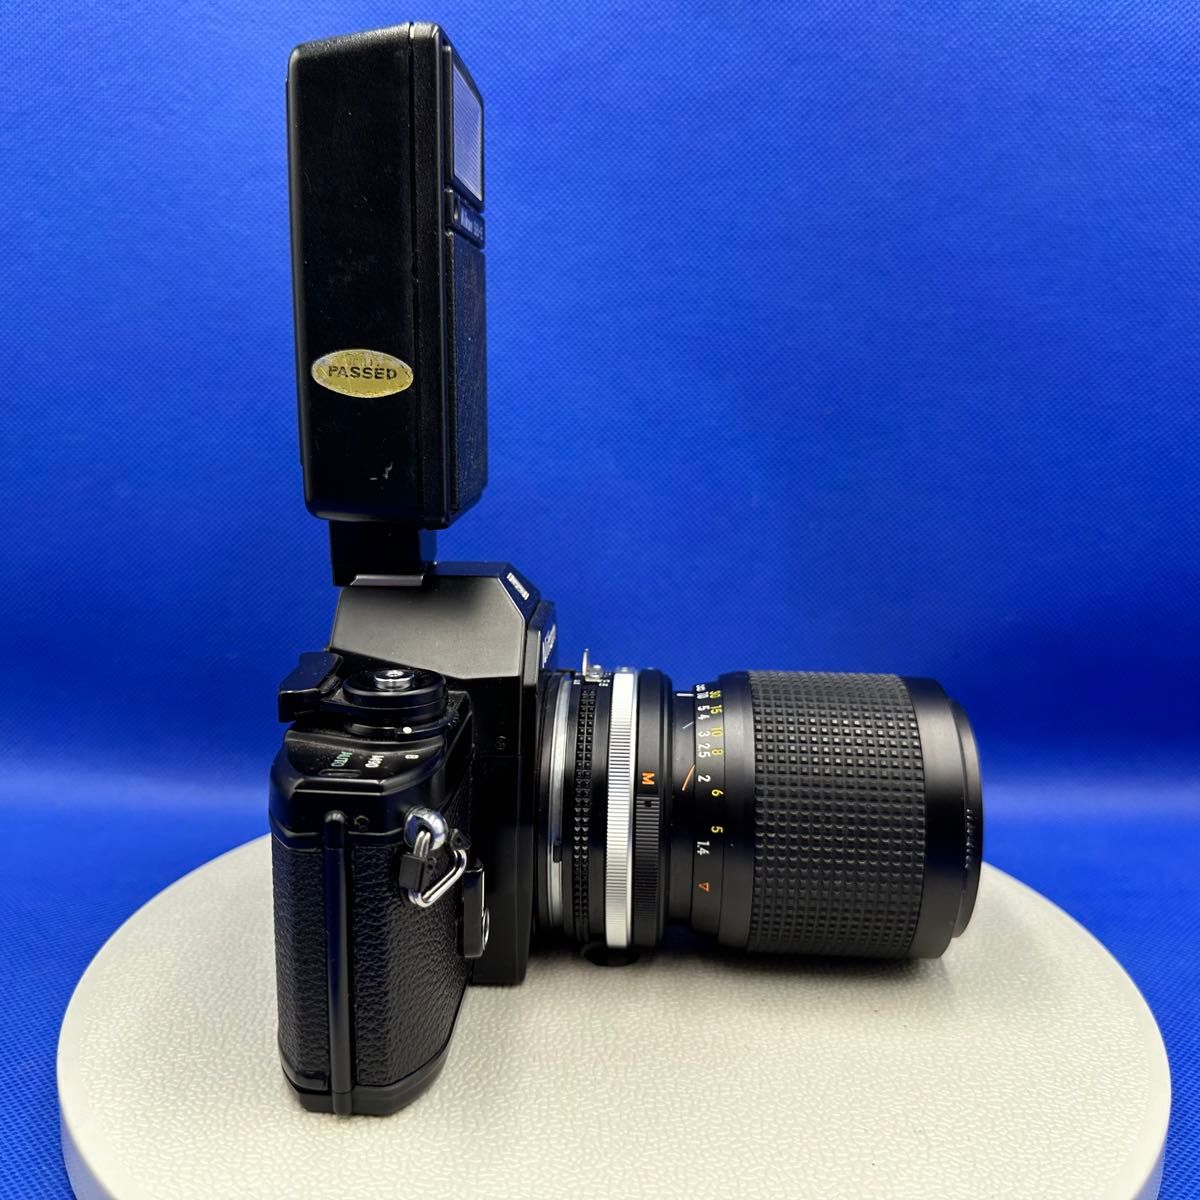 Nikon EM Zoom NIKKOR 35-105mm F3.5-4.5 SPEEDLIGHT SB-E